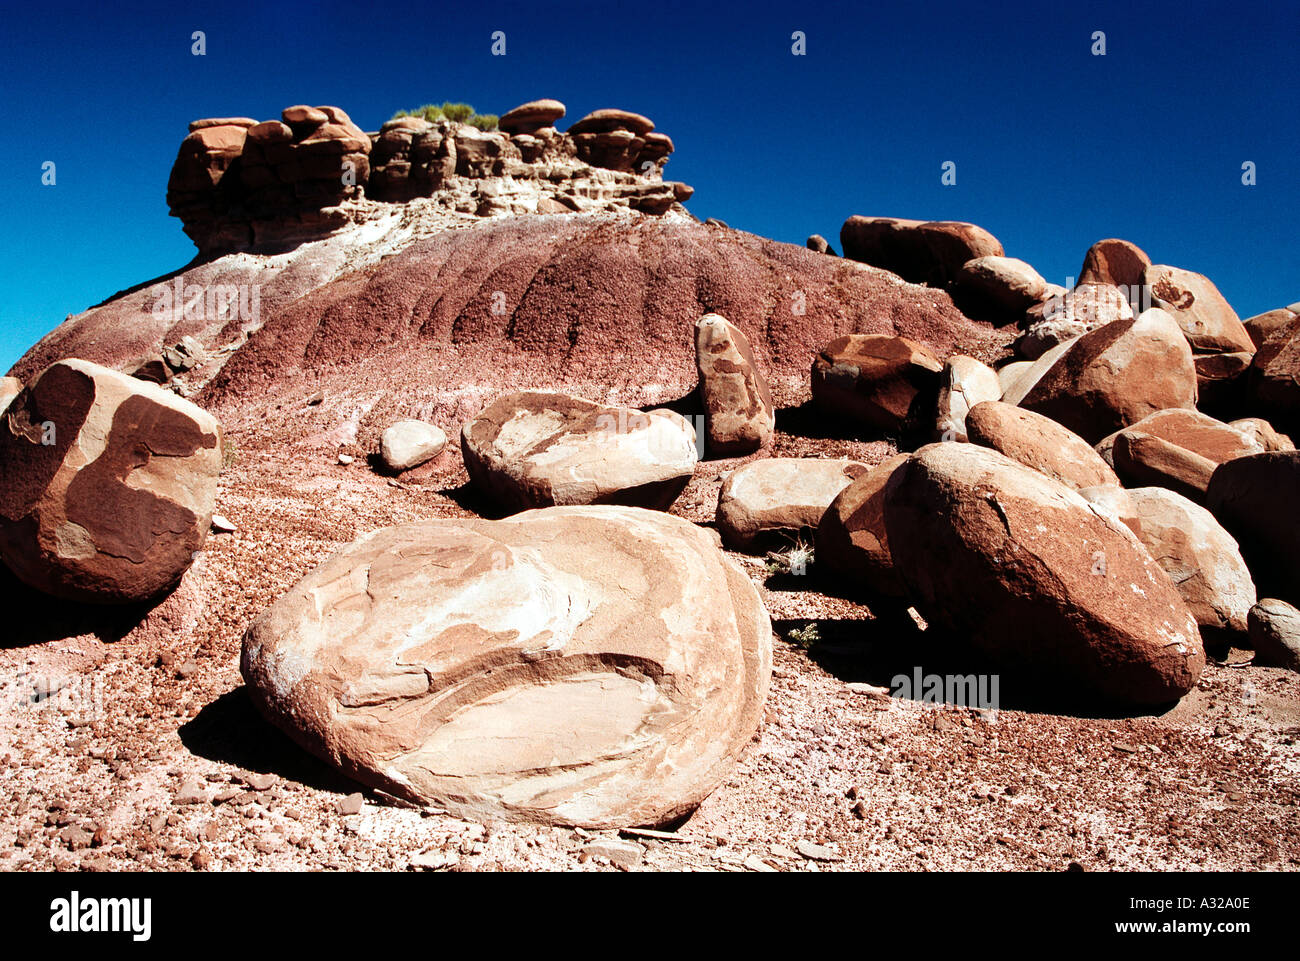 Amerian landscape rocks stones mountain at Petrified Forest National Park Arizona United States of America Stock Photo